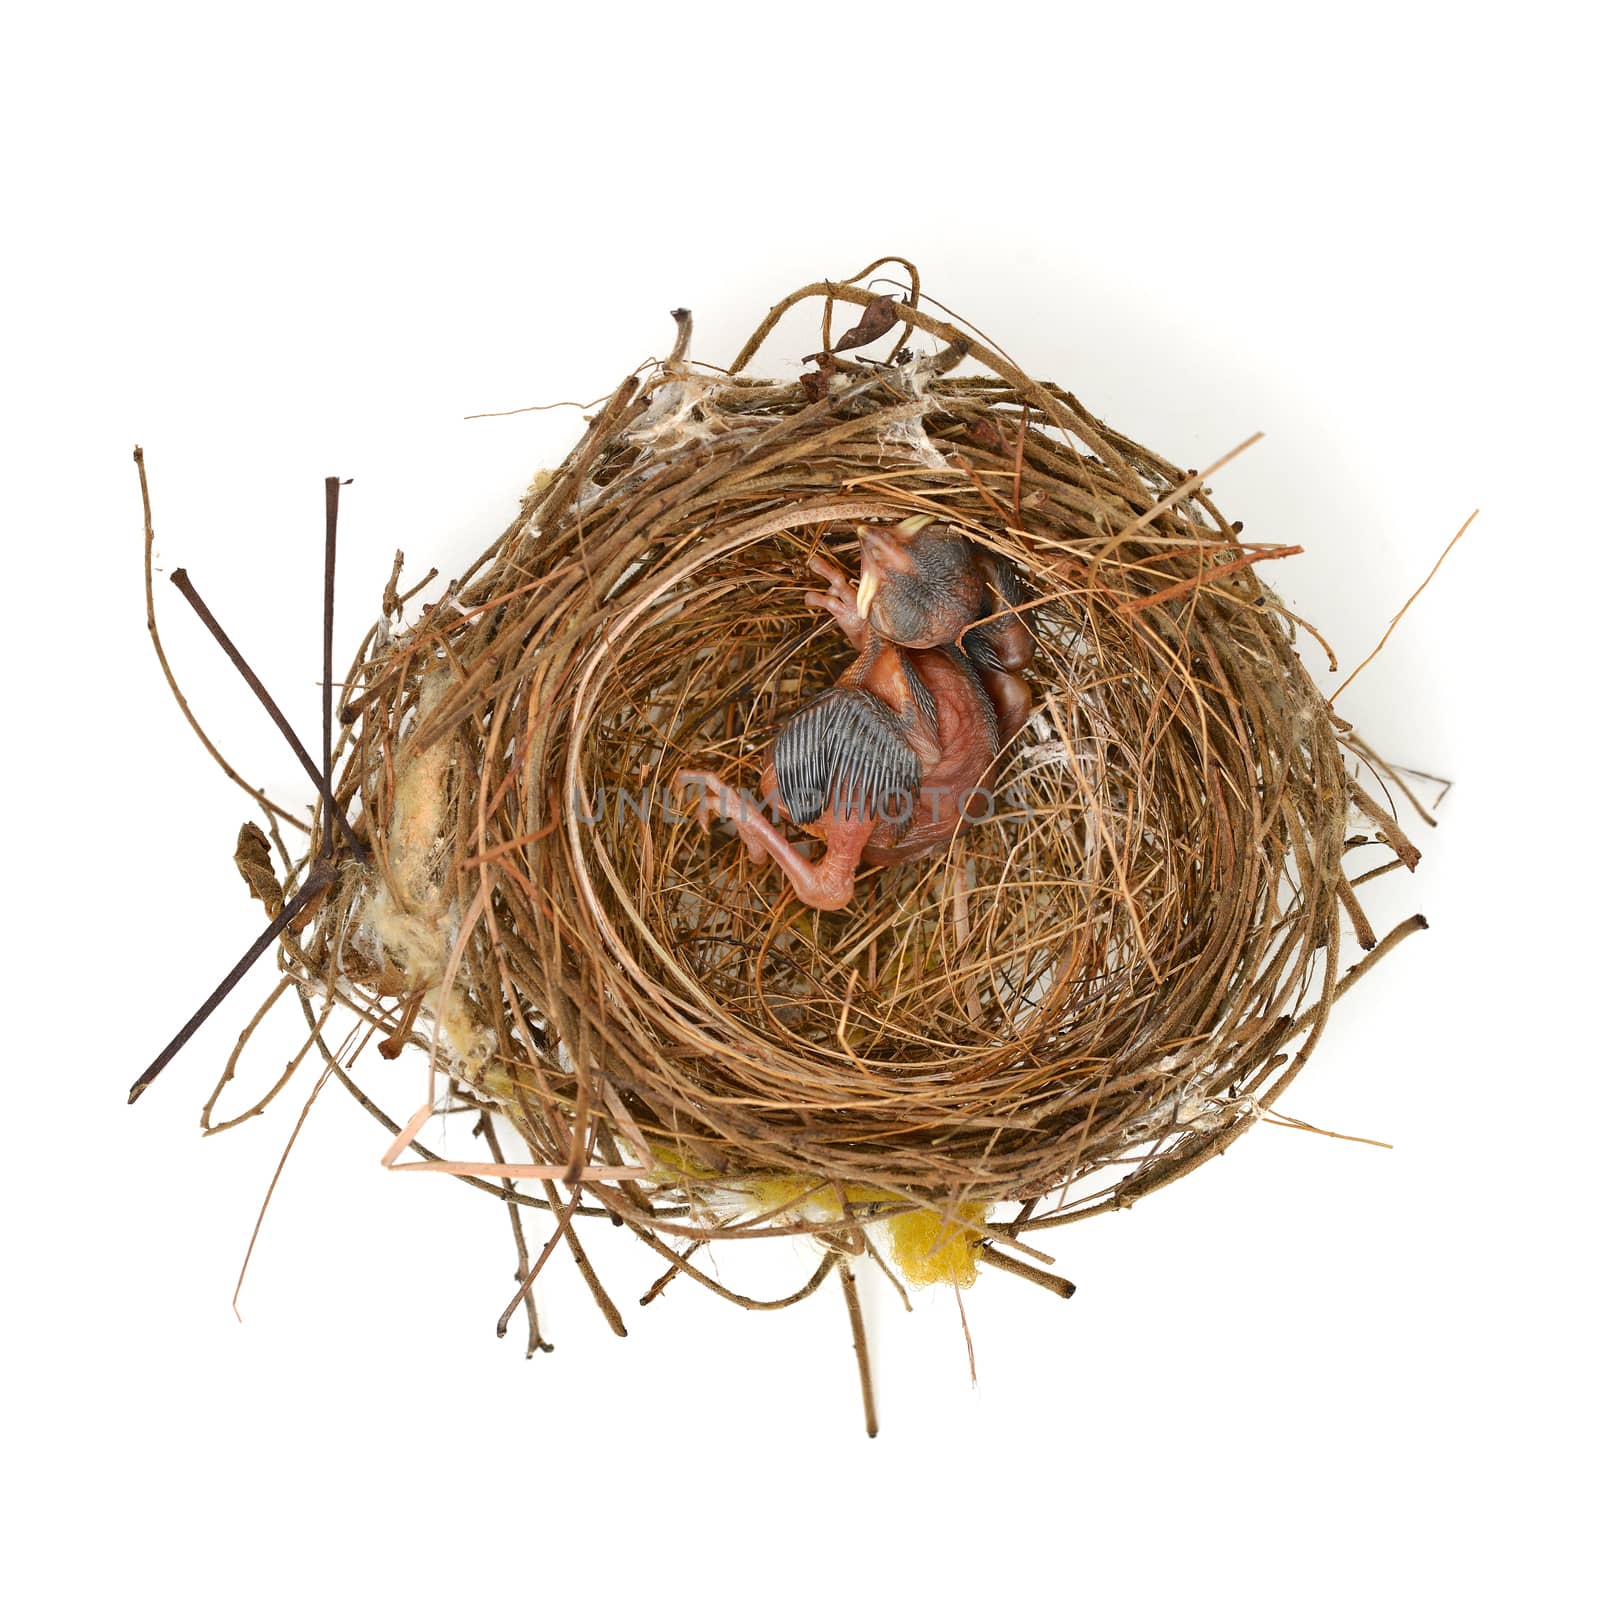 baby bird in a nest by antpkr